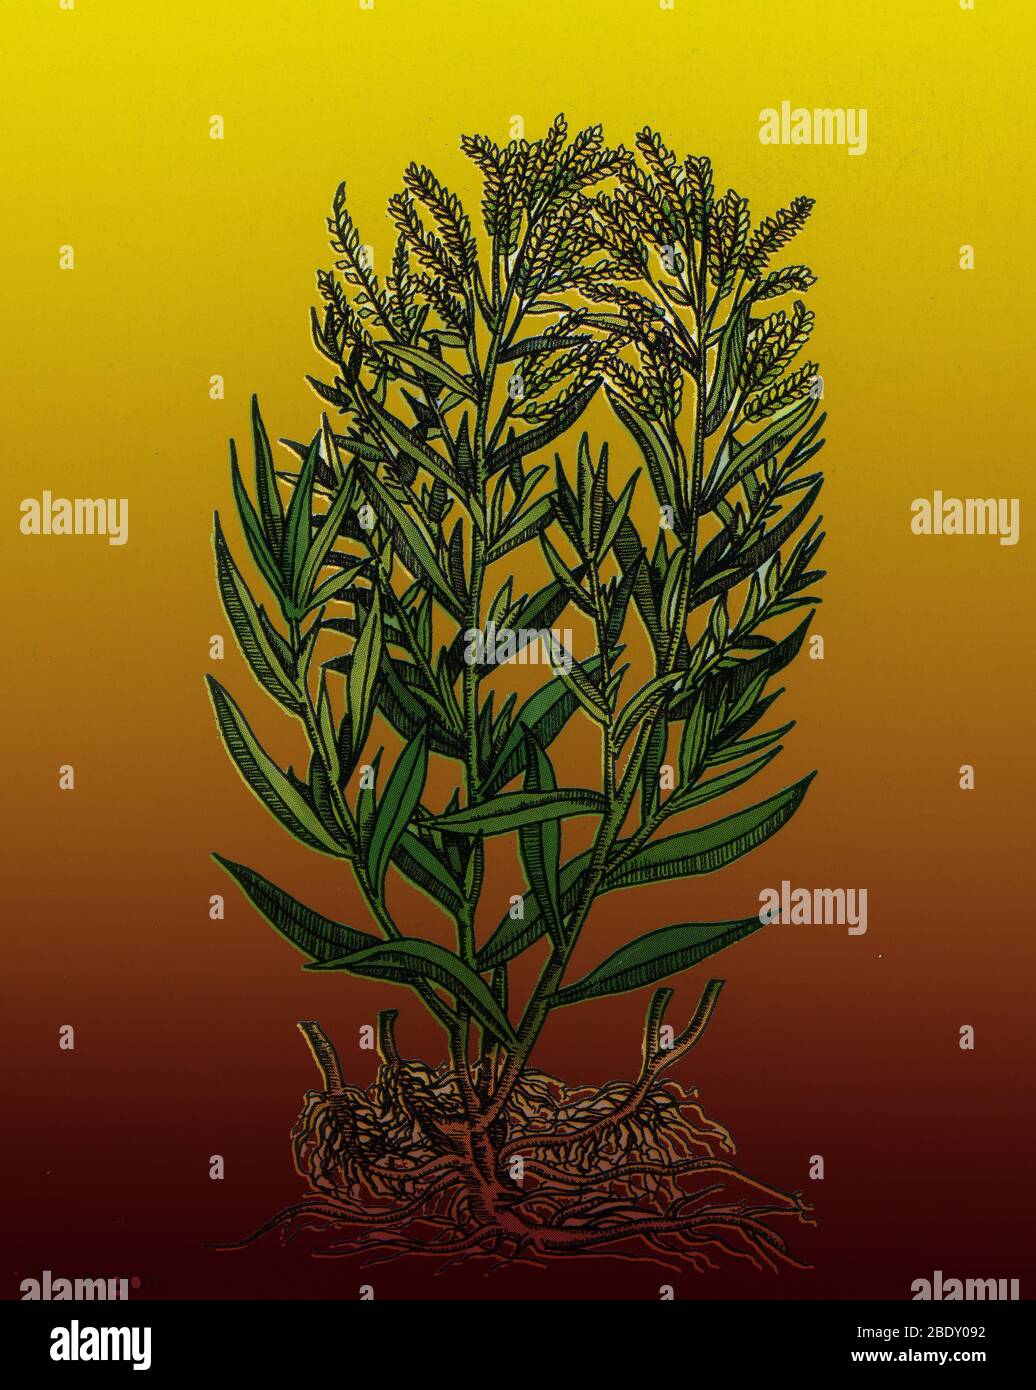 Tarragon, Perennial Herb Stock Photo